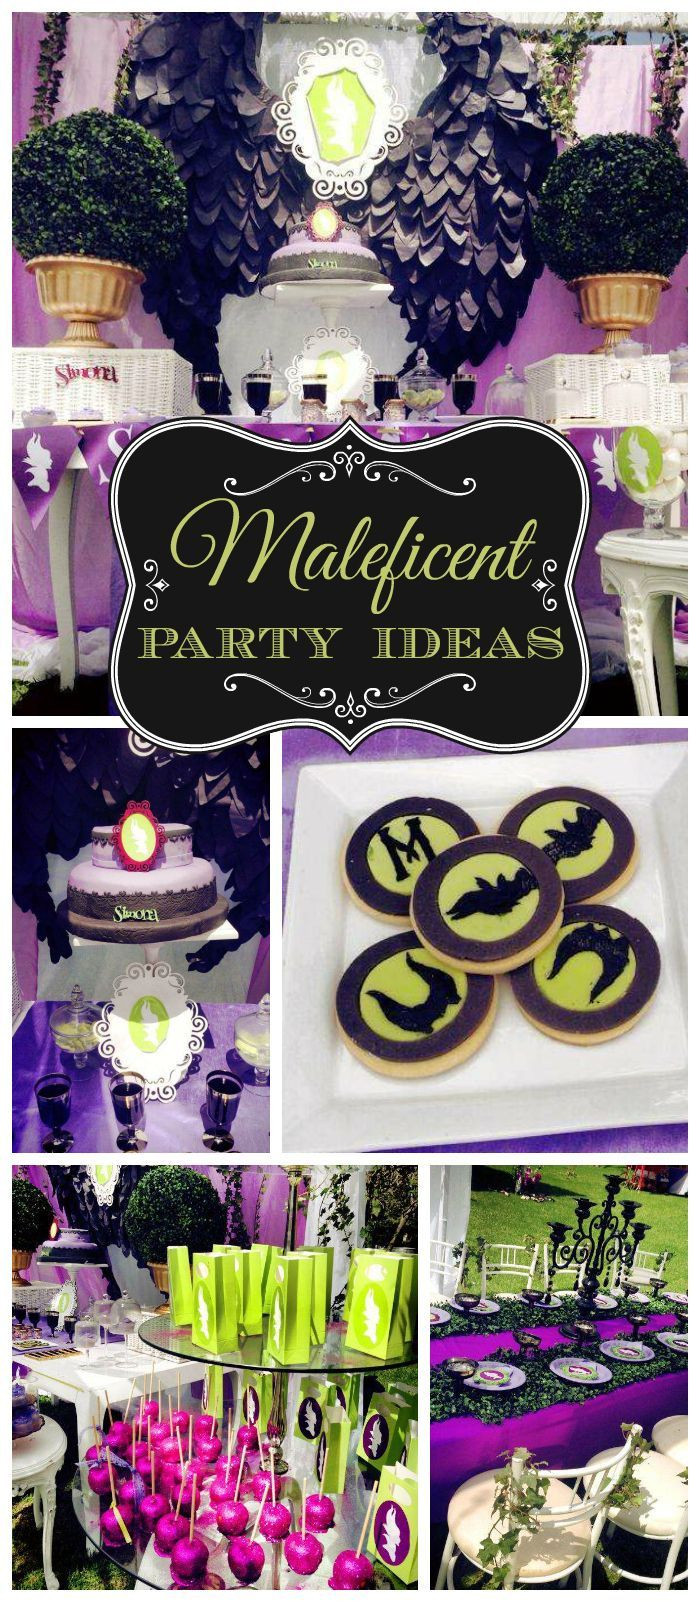 Disney Halloween Party Ideas
 Maleficent Birthday "Maleficent Party by Splash Party